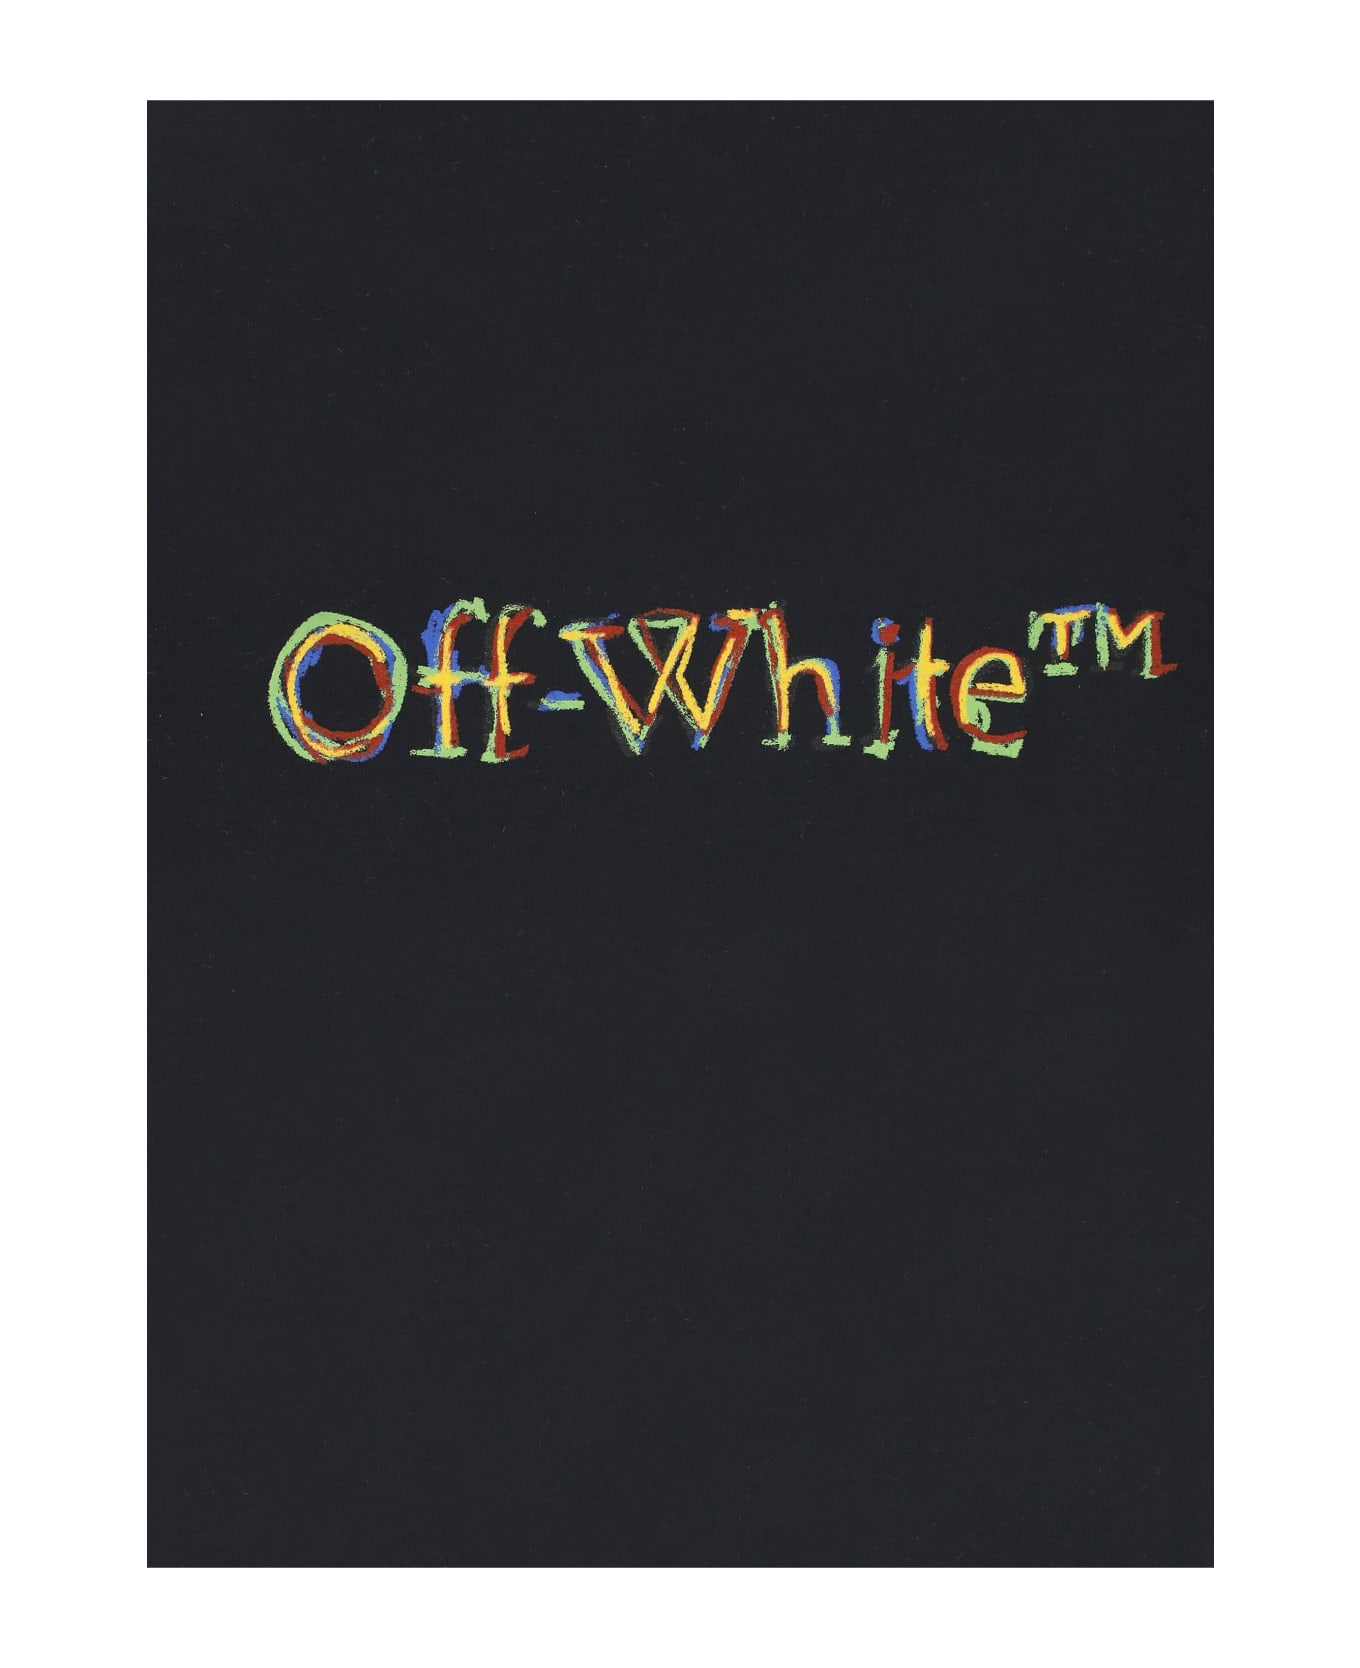 Off-White Logo Sketch T-shirt - Black